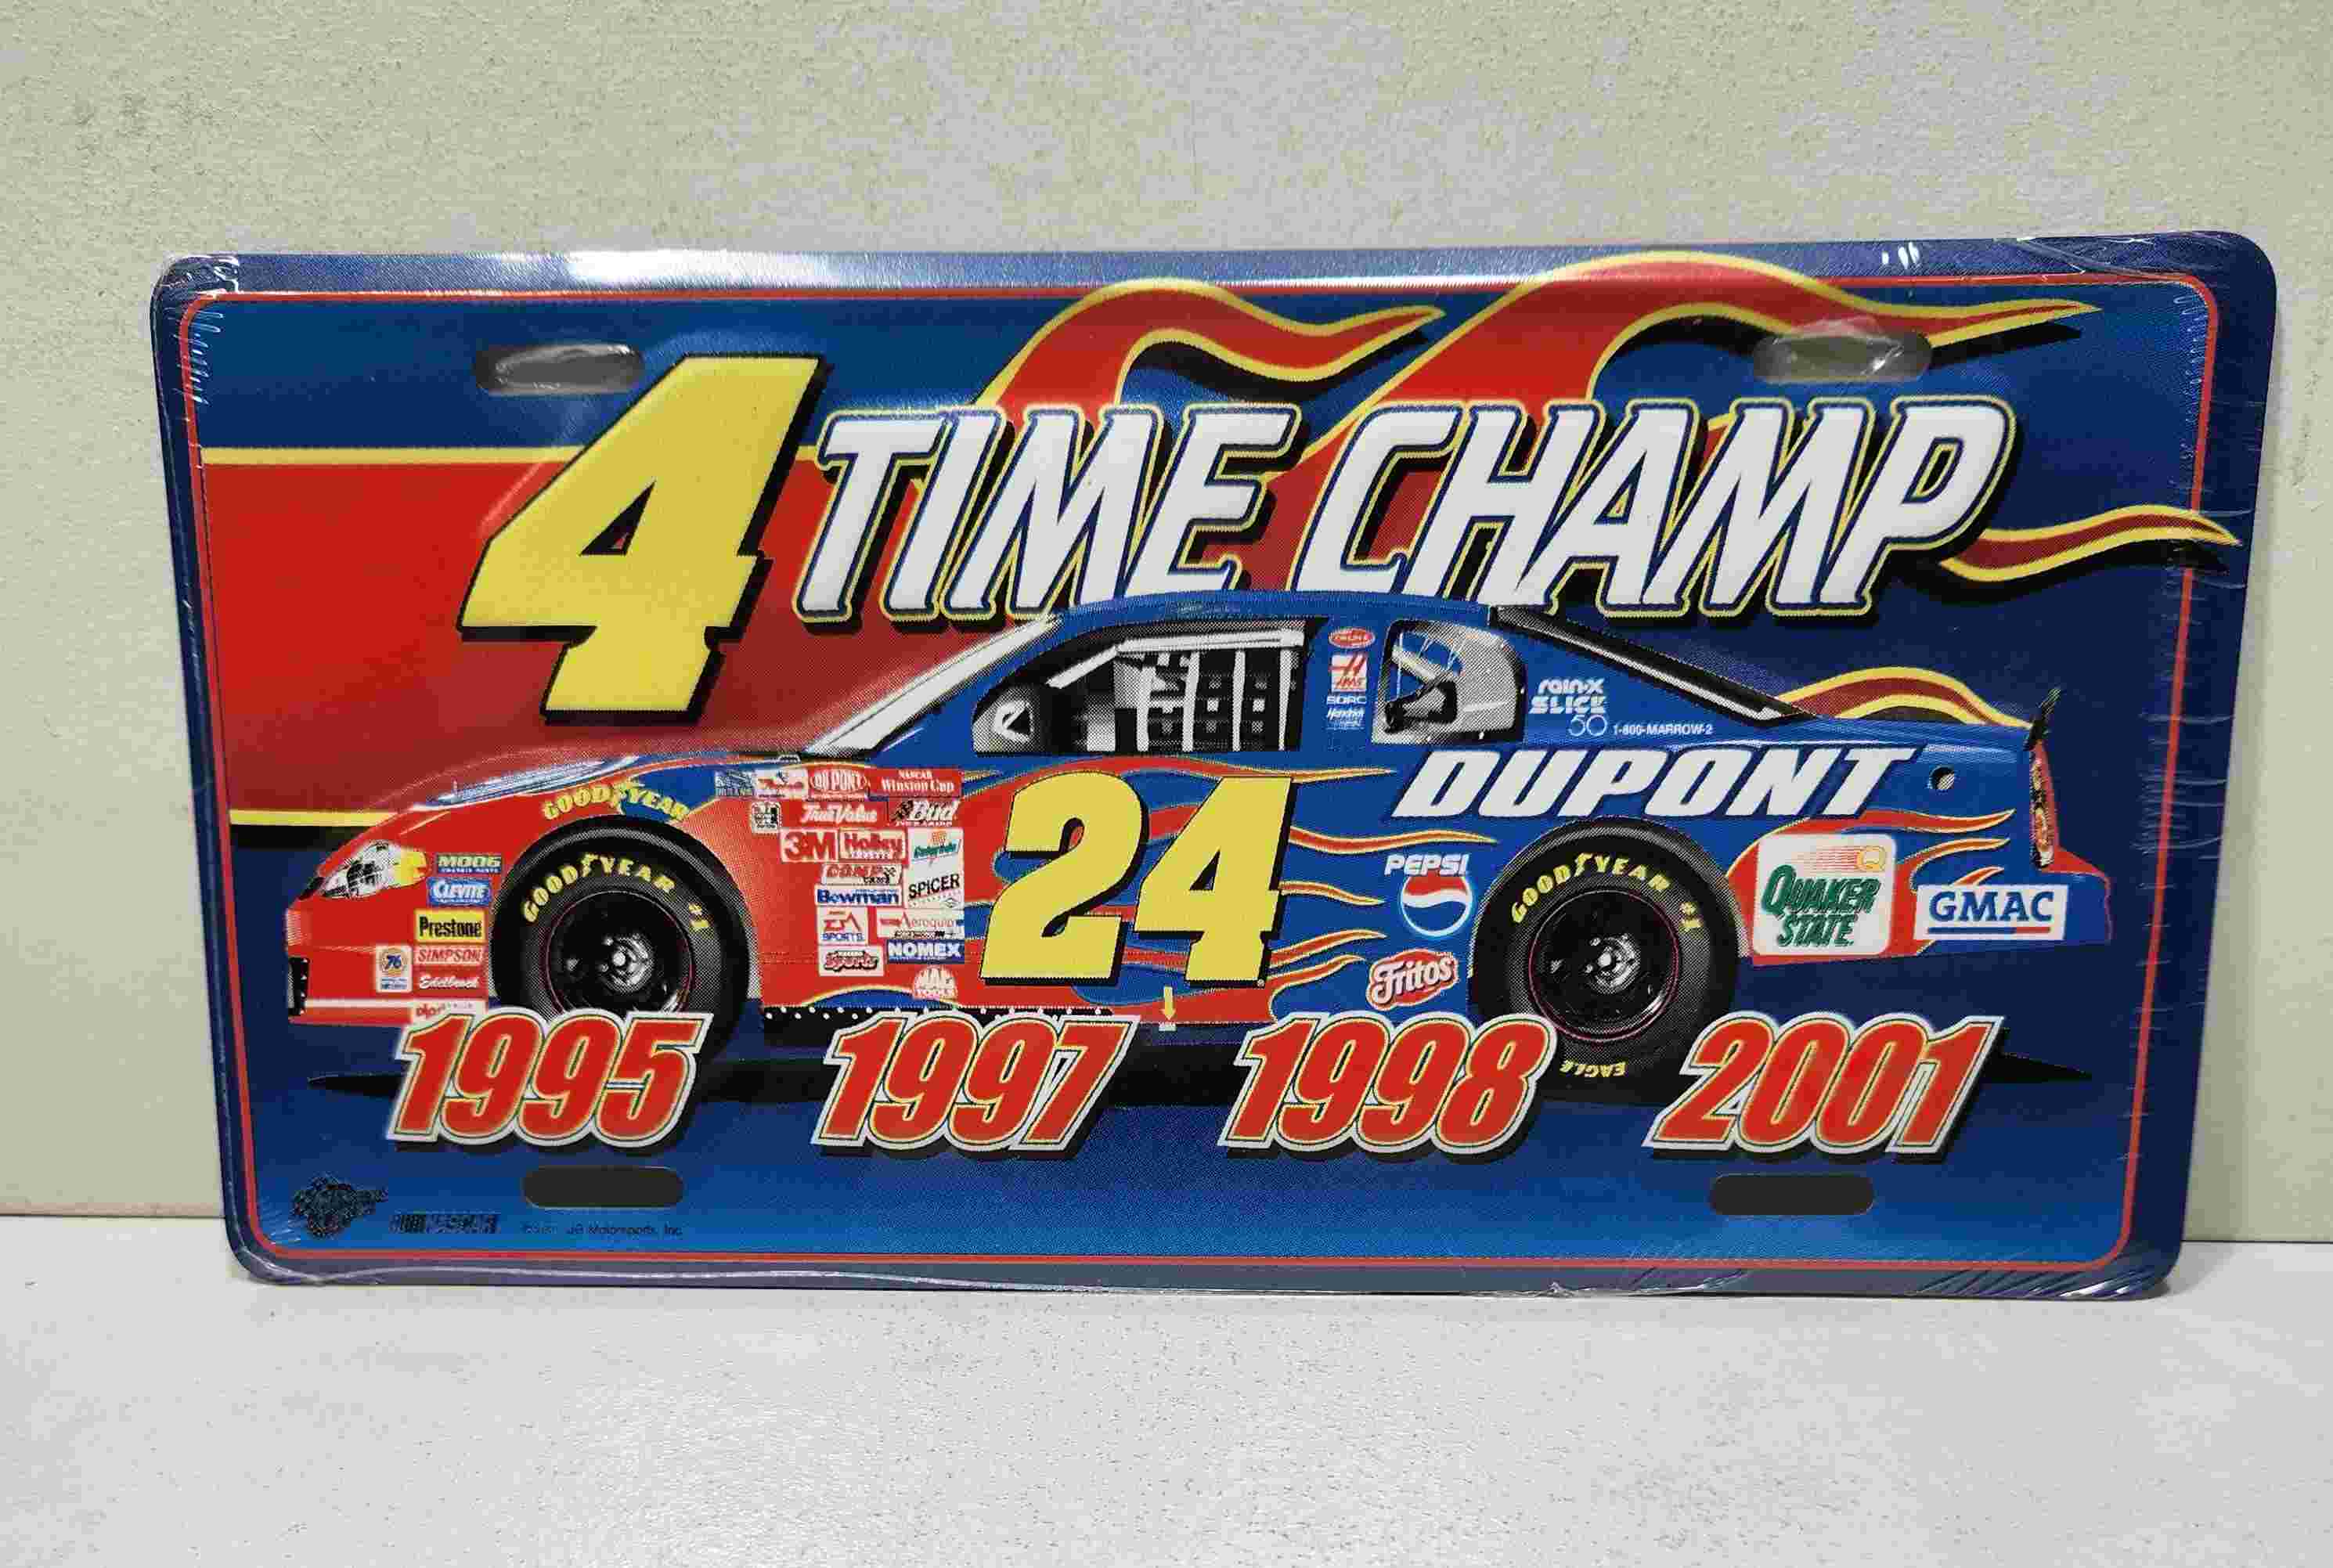 2001 Jeff Gordon Dupont "4 Time Champion" metal license plate